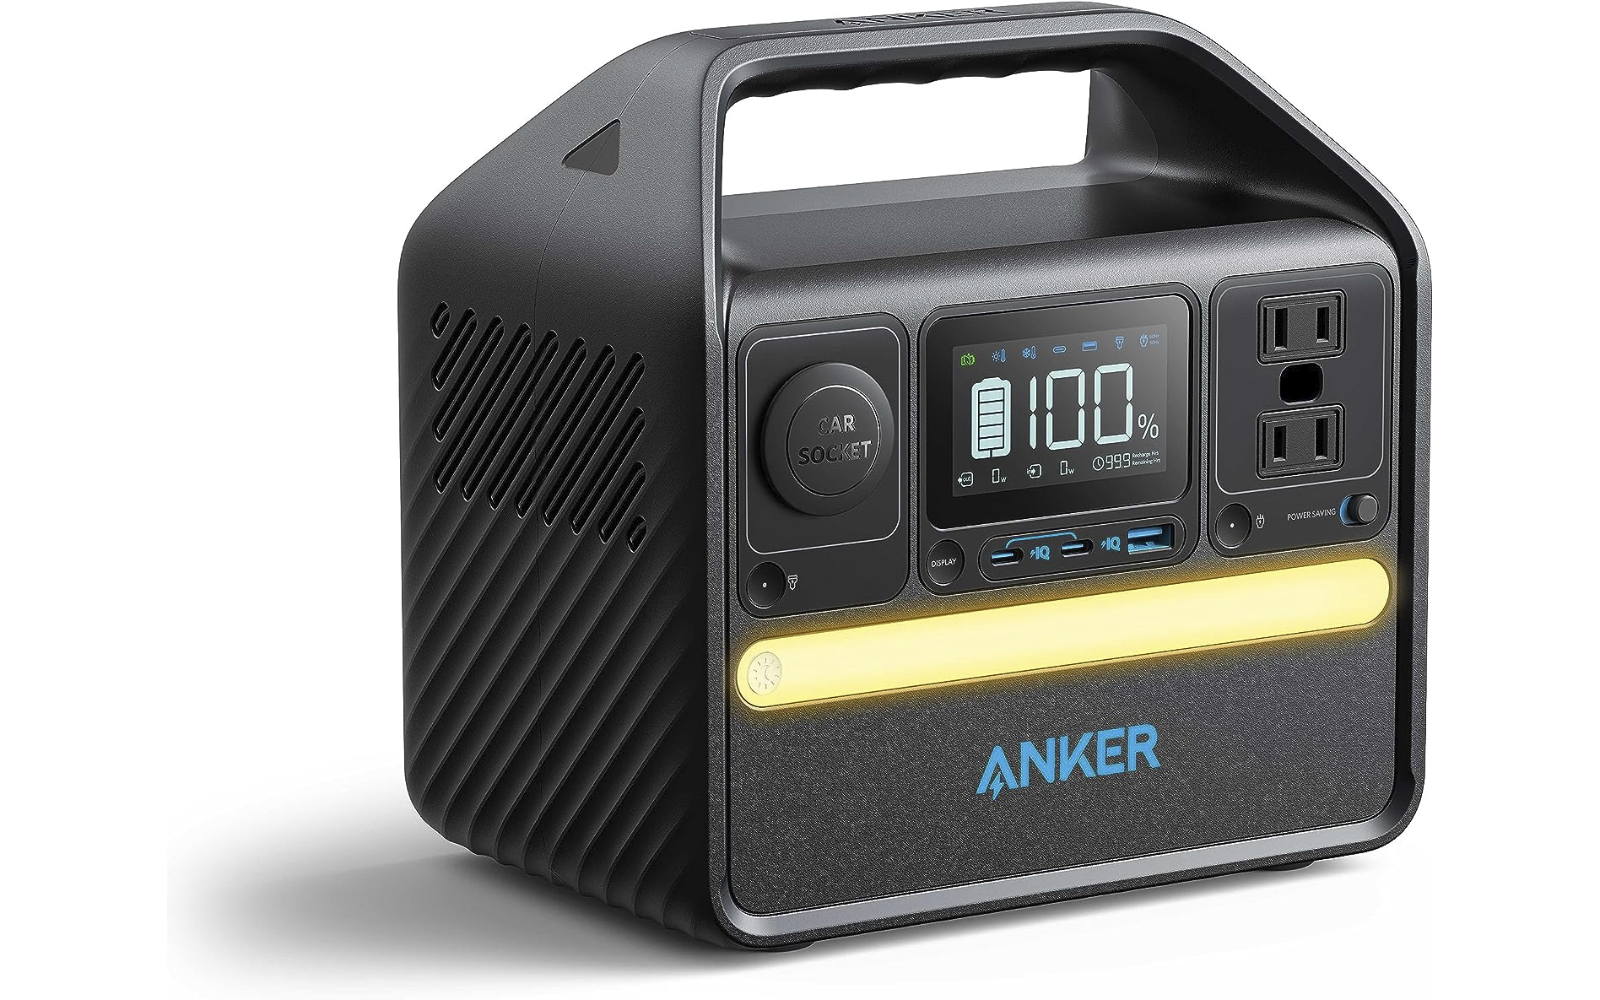 Anker 522 portable power station